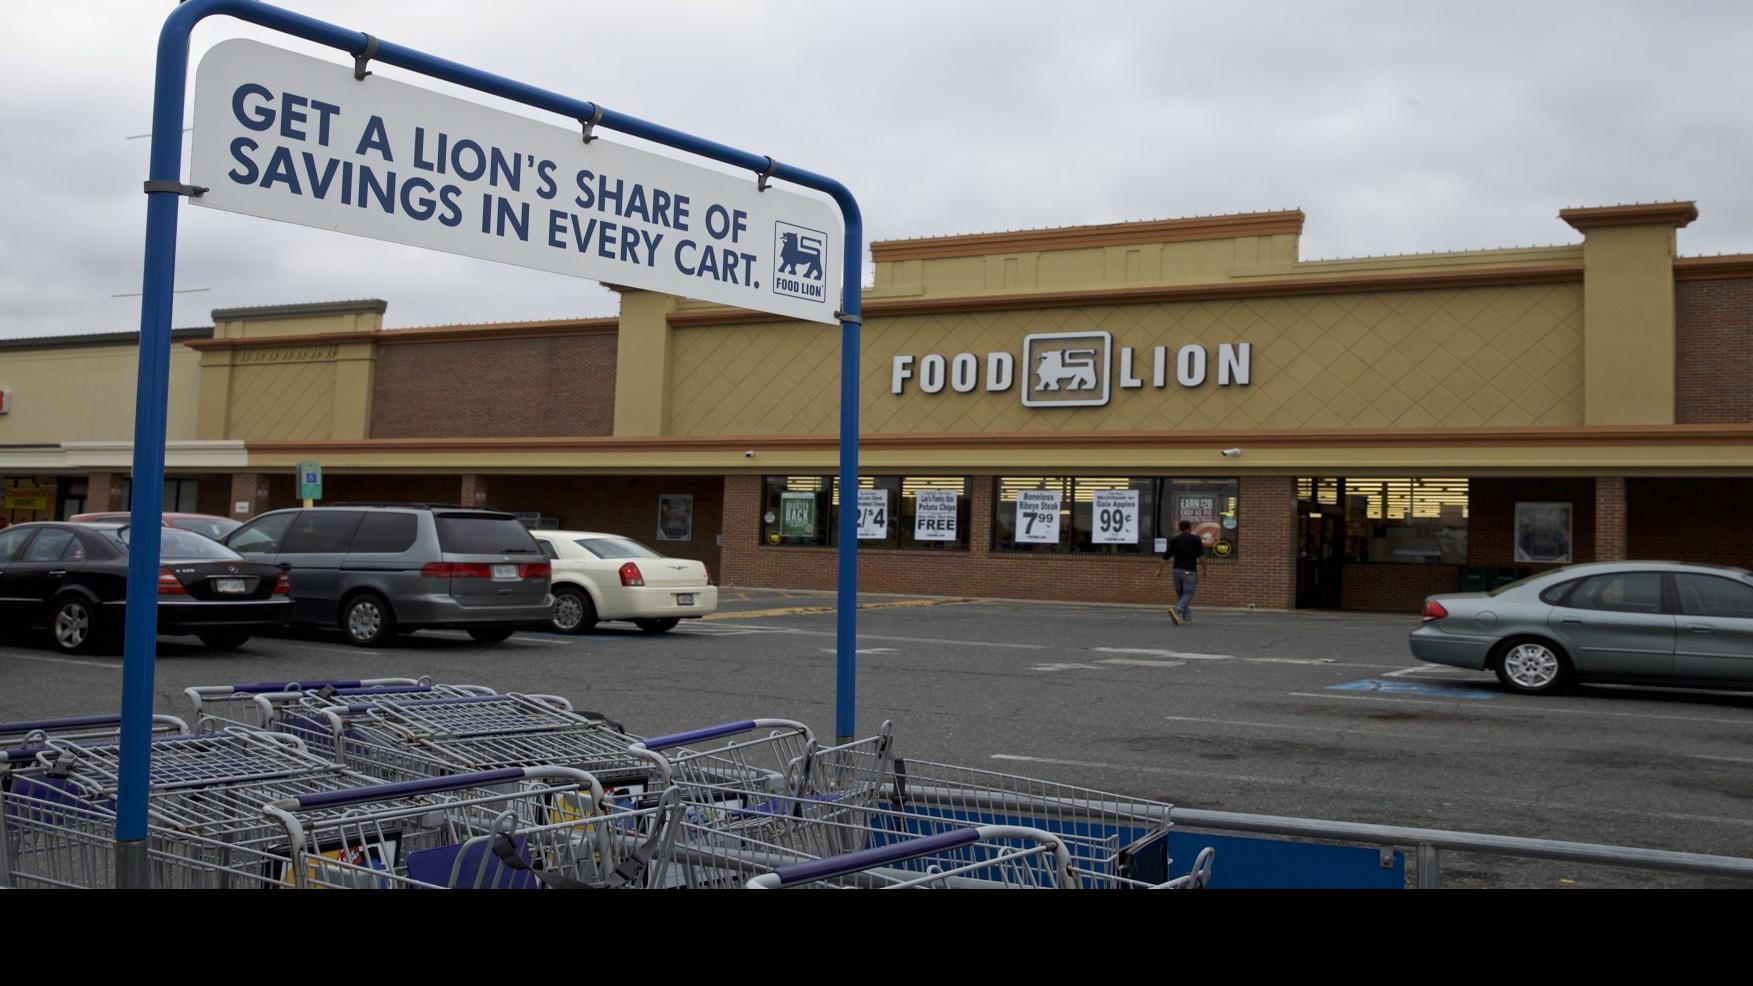 Area Food Lions To Close Beginning Oct 14 Will Convert To Weis Markets Stores Business News Fredericksburg Com [ 986 x 1753 Pixel ]